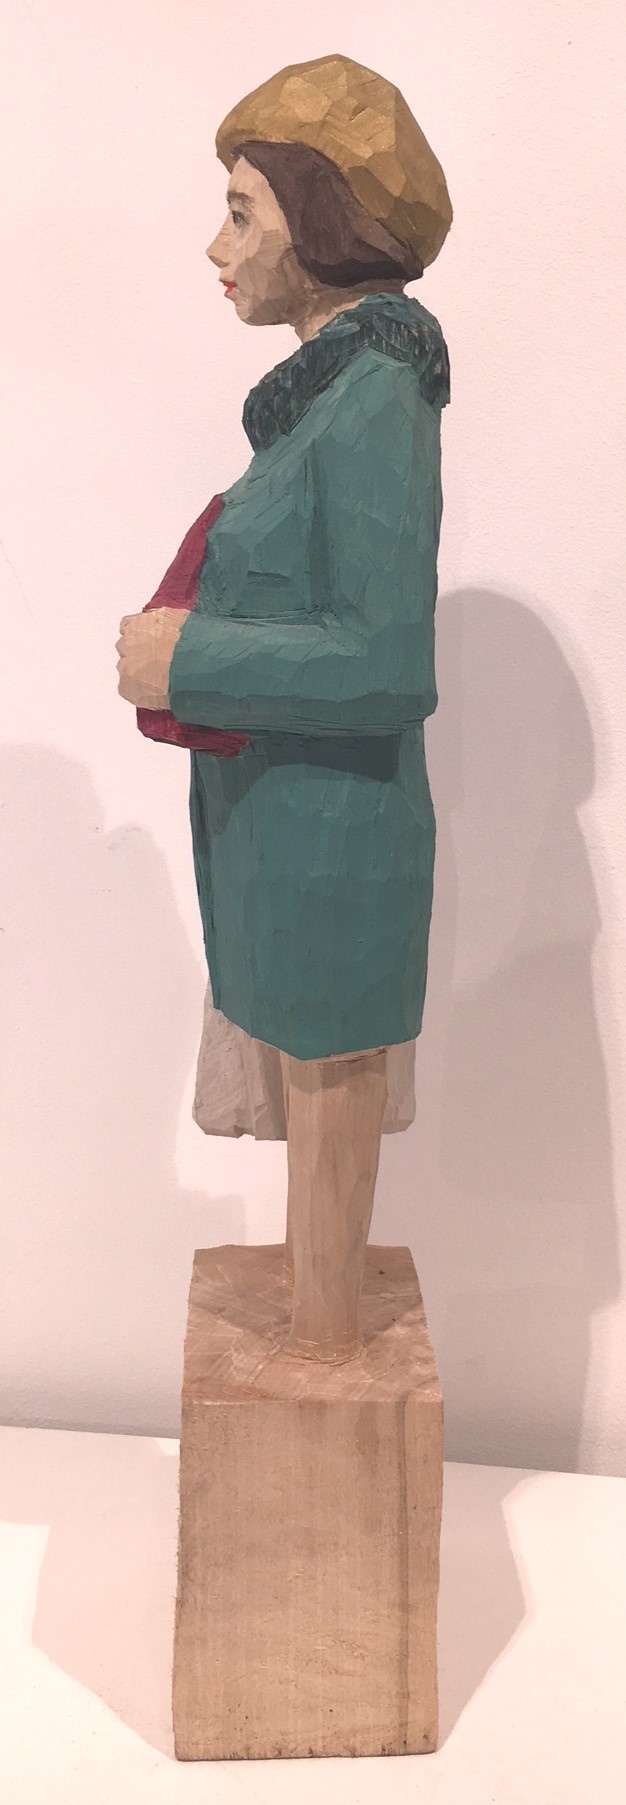 Edekafrau (1128) mit Handschuh